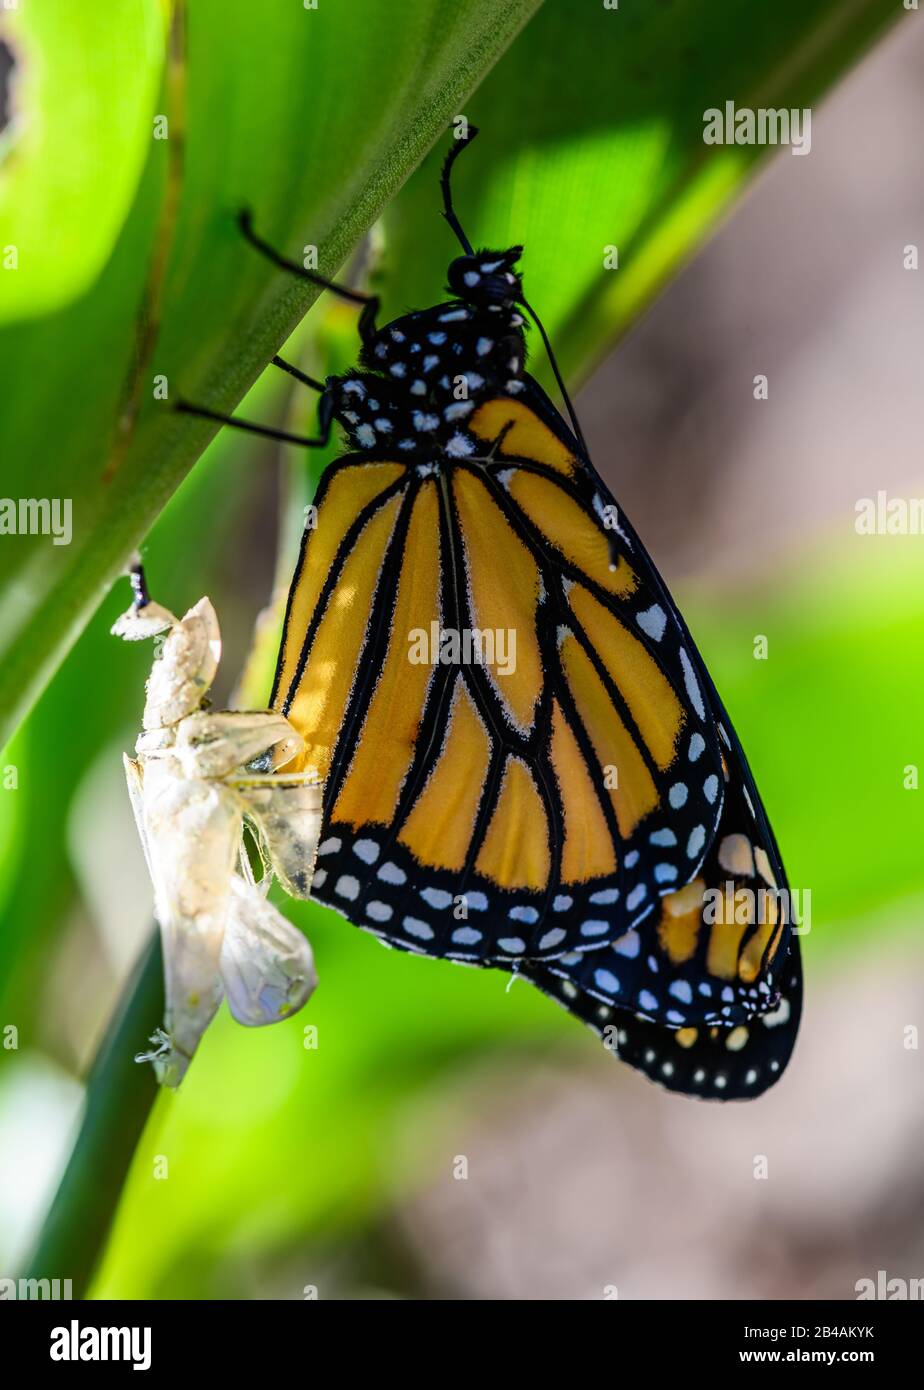 Freshly emerged Monarch Butterfly (Danaus plexippus) from chrysalis. Houston, Texas, USA. Stock Photo